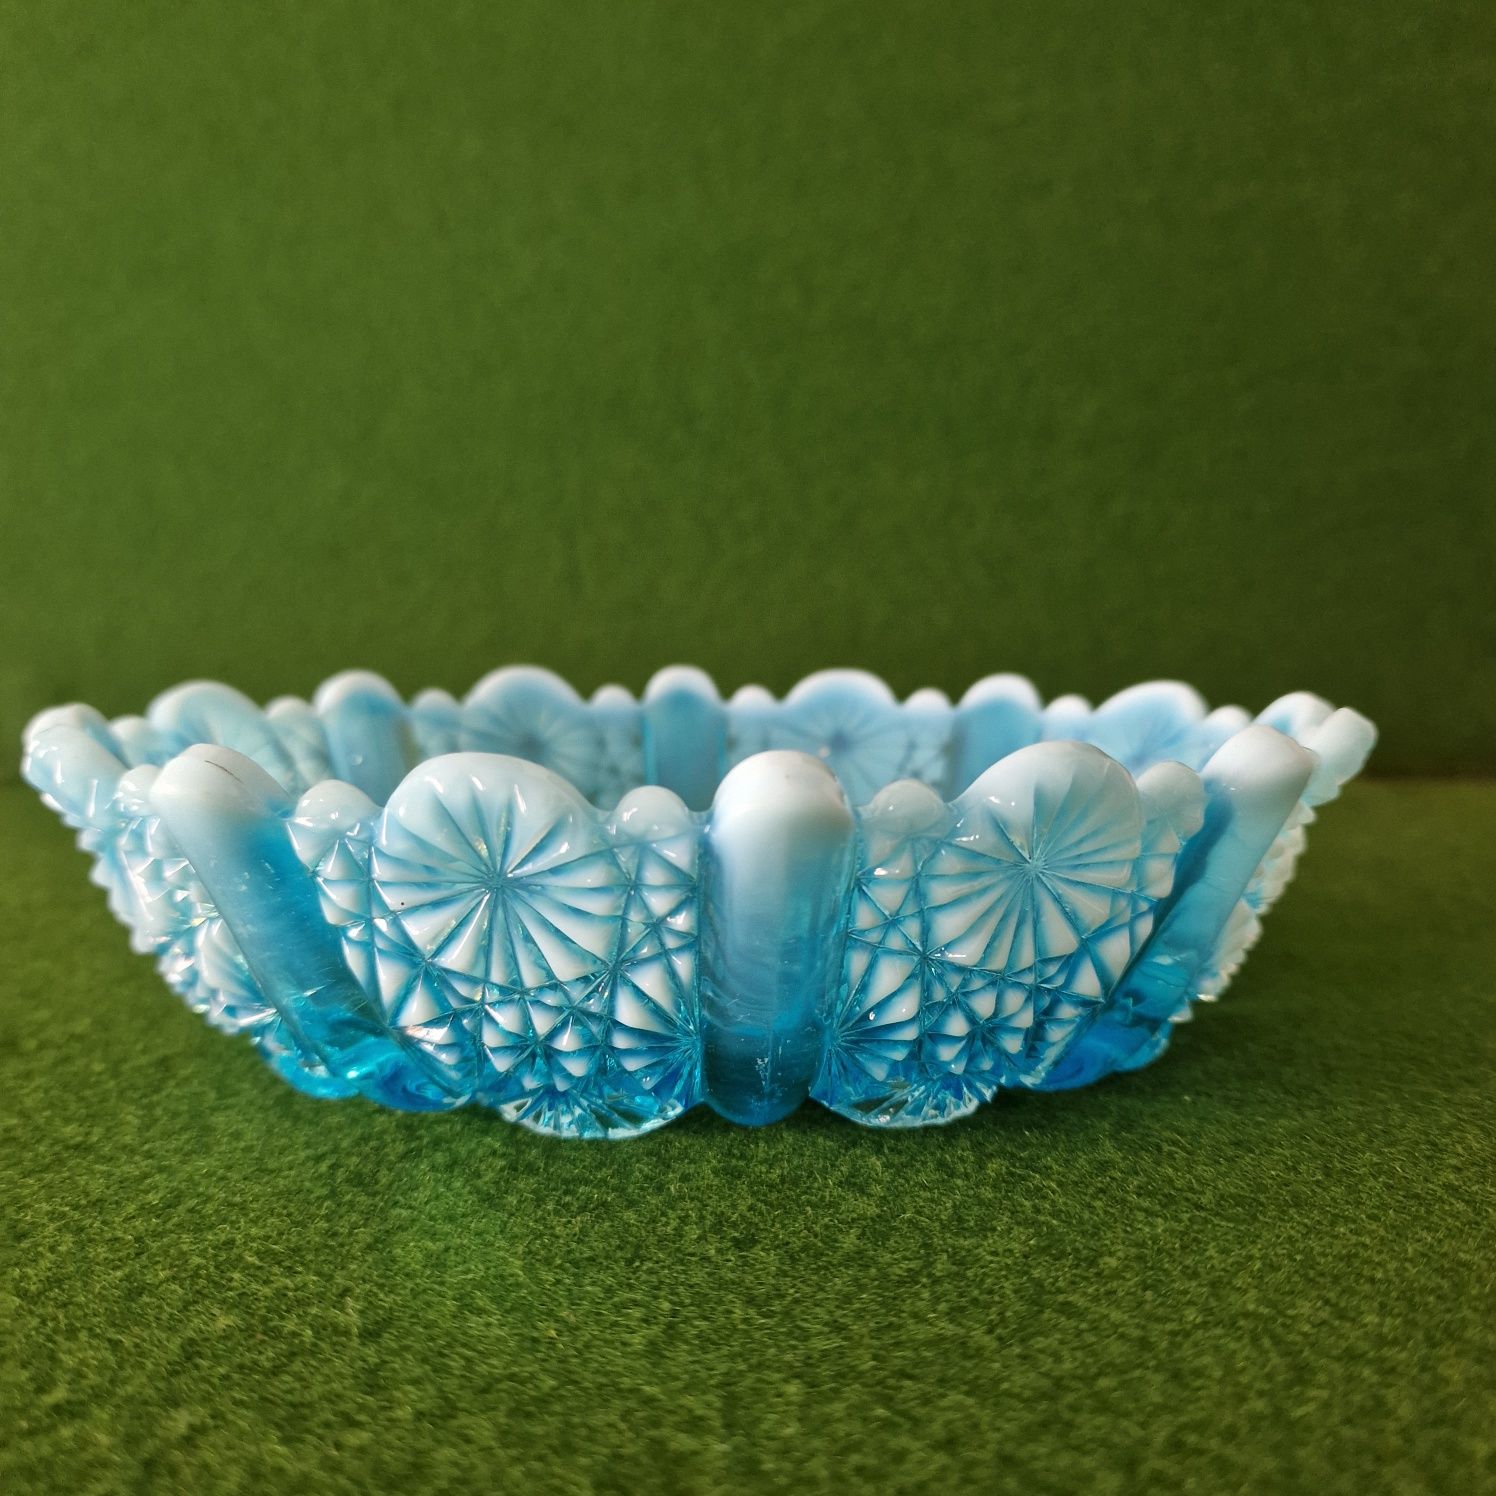 Taça em vidro azul turquesa (vaseline glass)